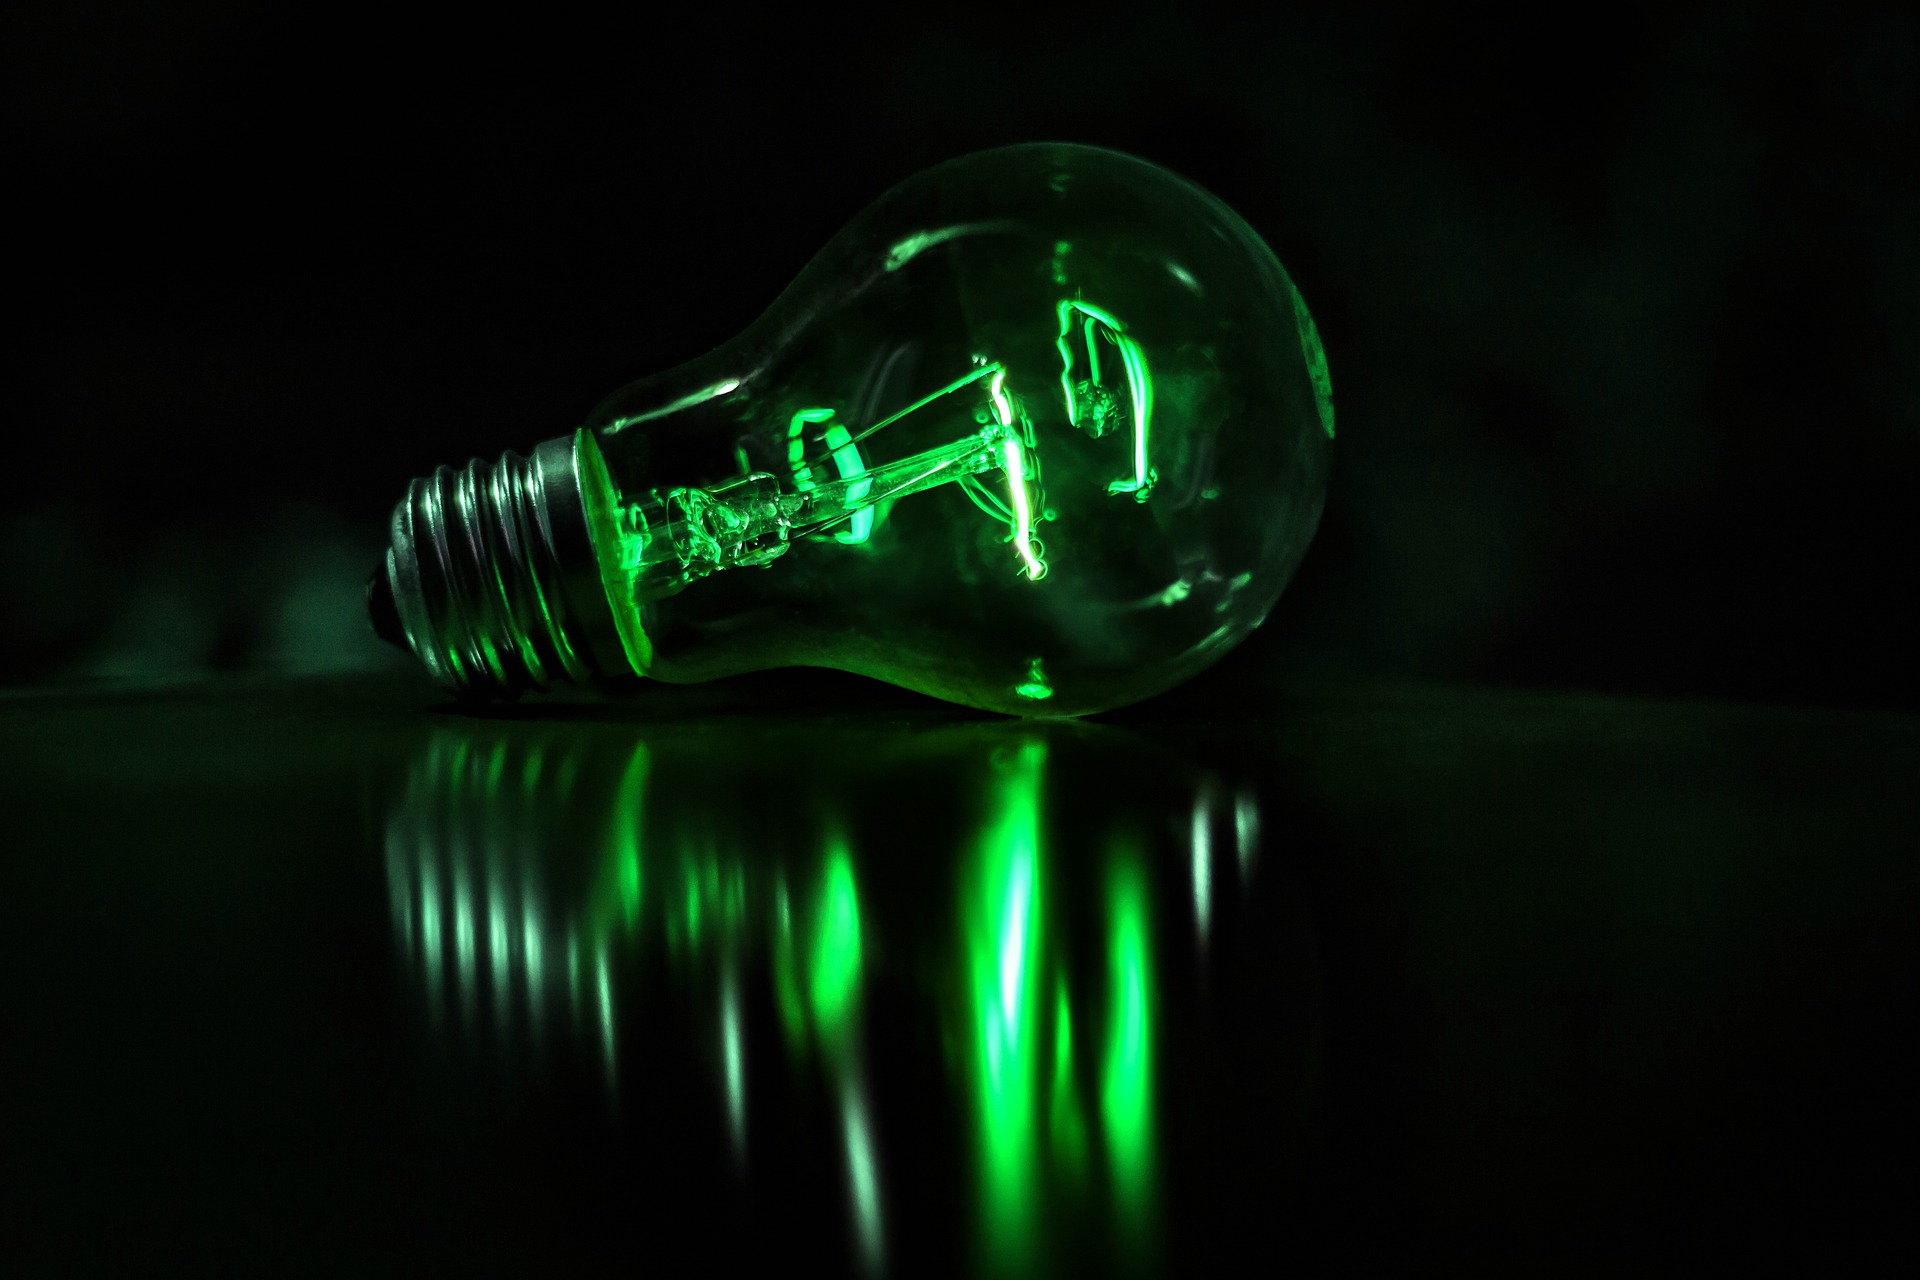 Green Light Bulb by Dewald Van Rensburg